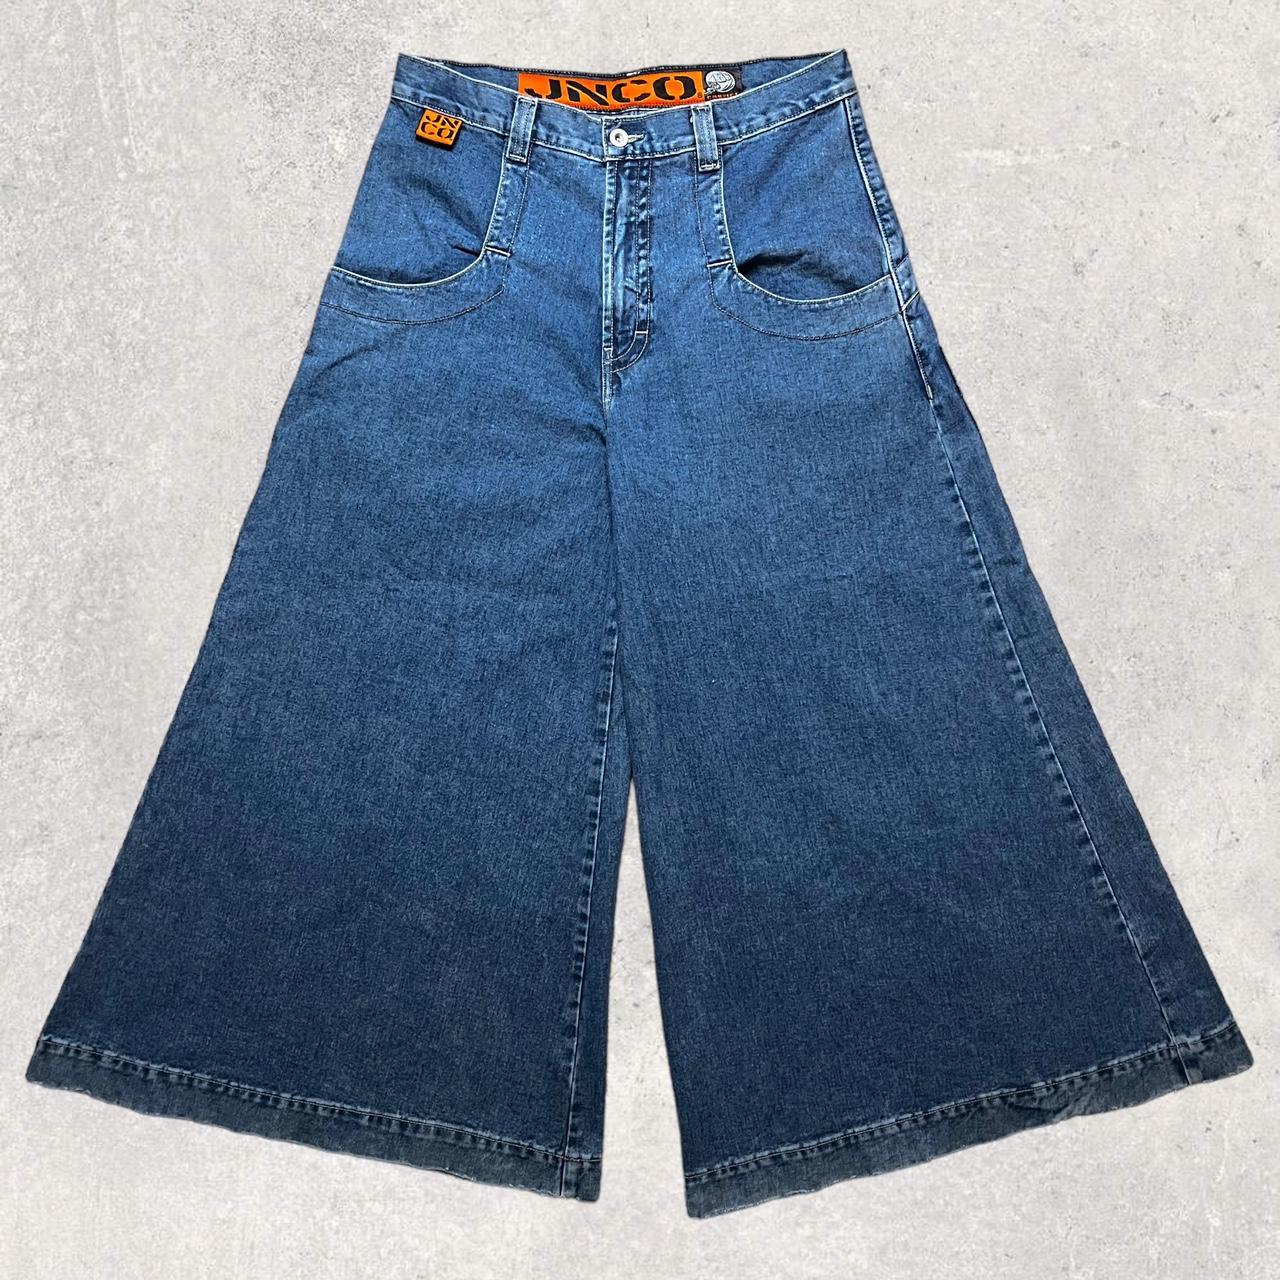 JNCO convict 50 vintage baggy wide jeans Send... - Depop